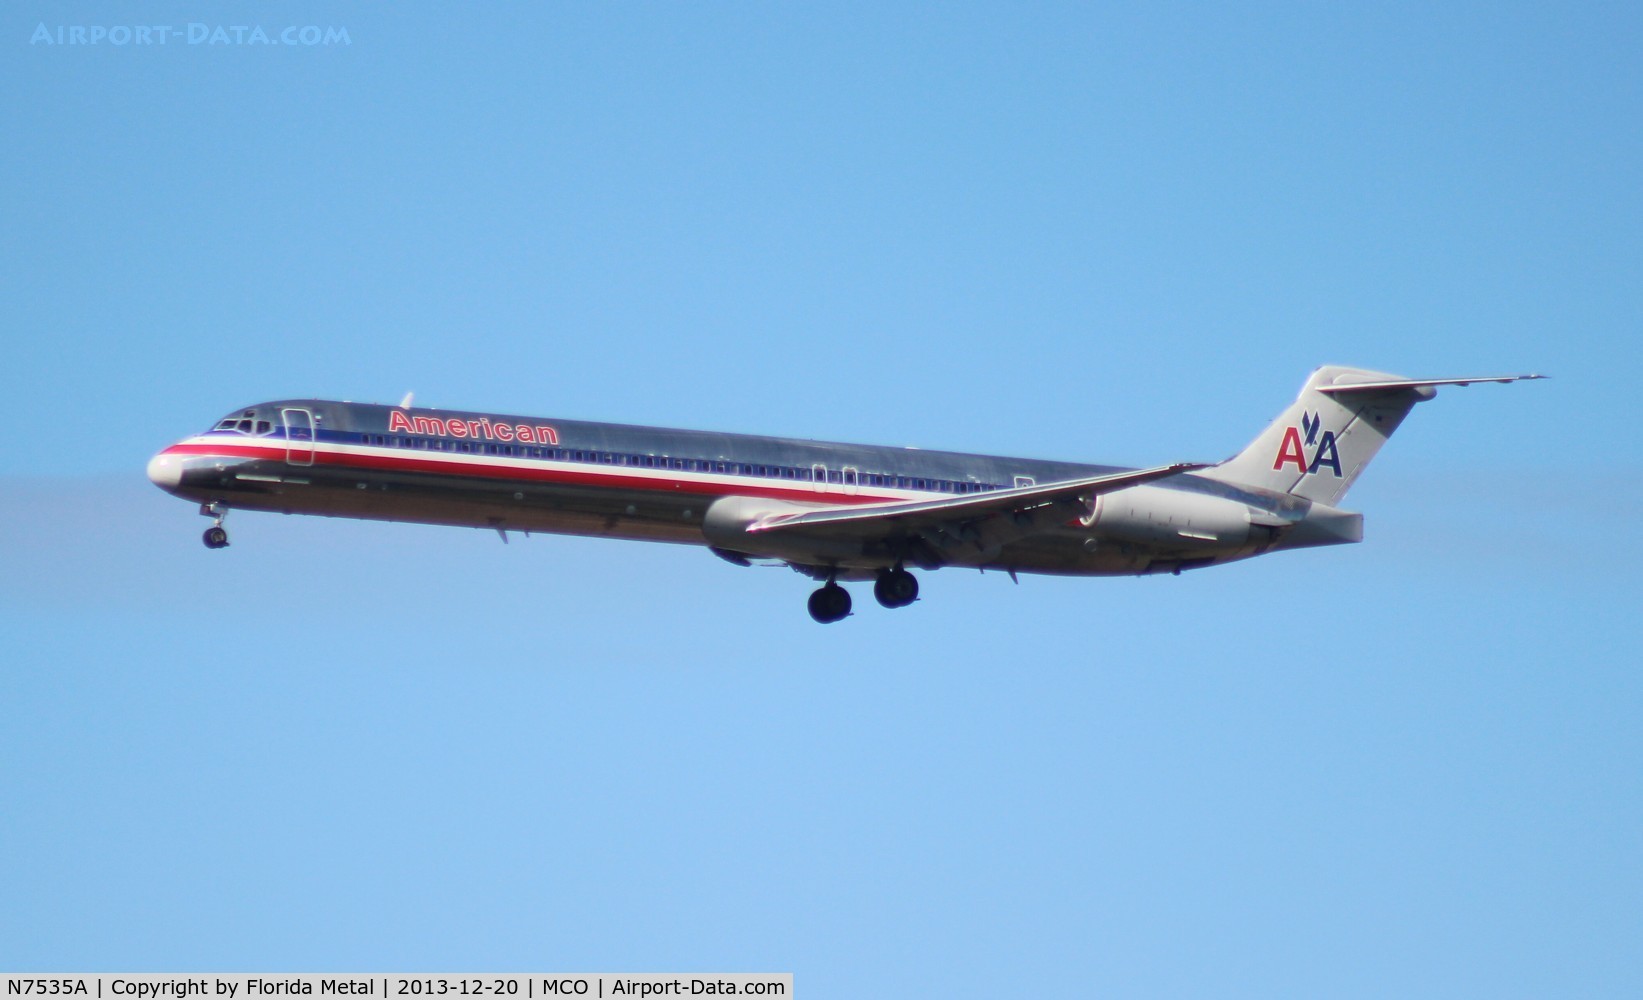 N7535A, 1990 McDonnell Douglas MD-82 (DC-9-82) C/N 49989, American